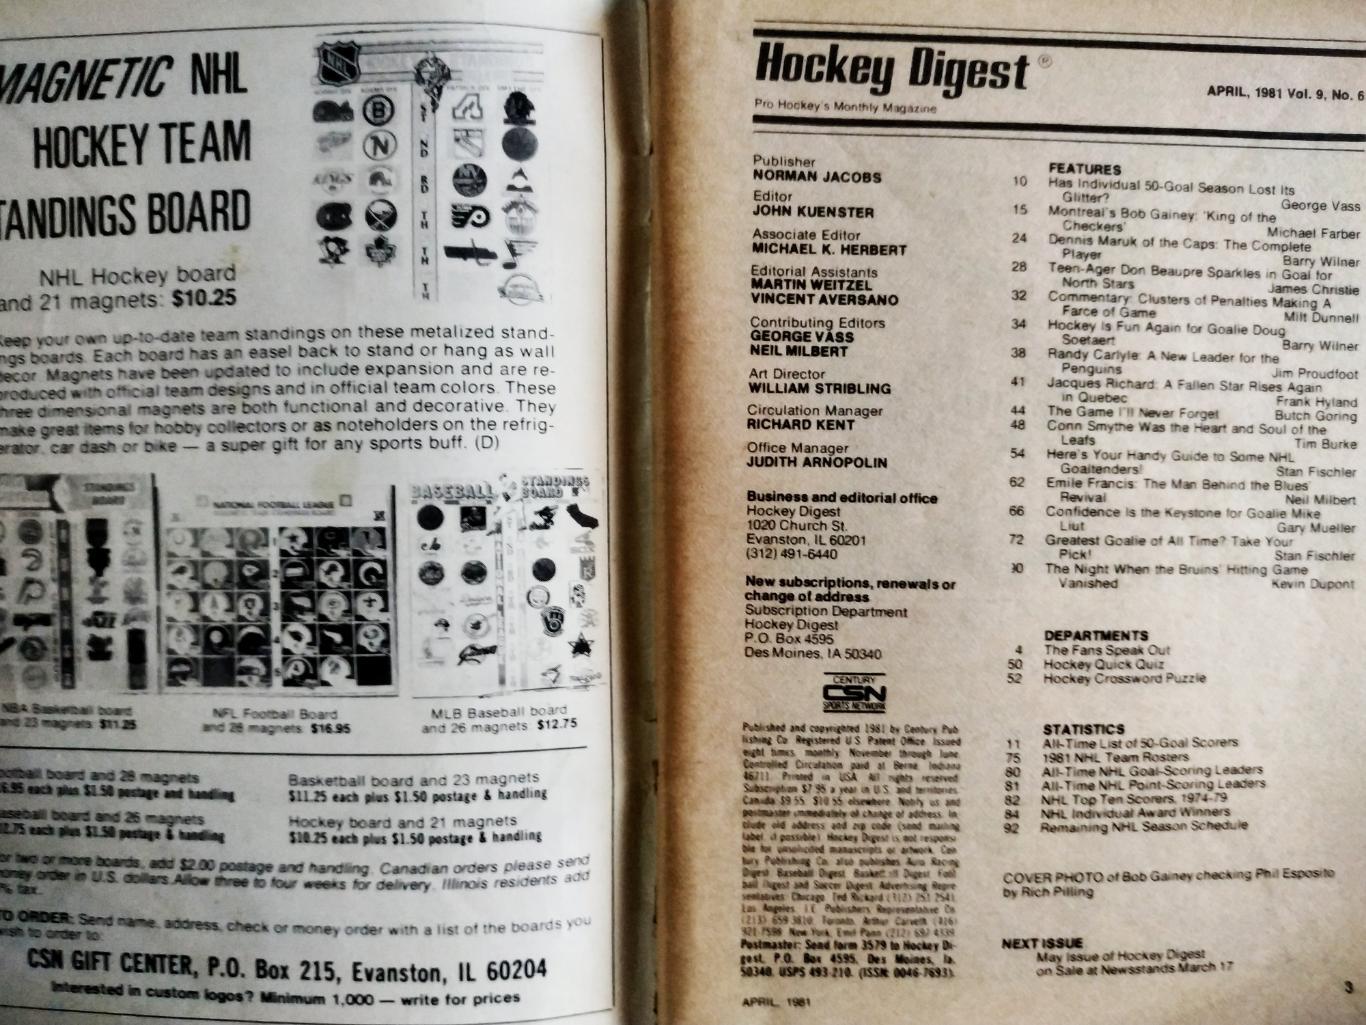 ХОККЕЙ ЖУРНАЛ ЕЖЕМЕСЯЧНИК НХЛ ХОККИ ДАЙДЖЕСТ NHL APRIL 1981 THE HOCKEY DIGEST 1